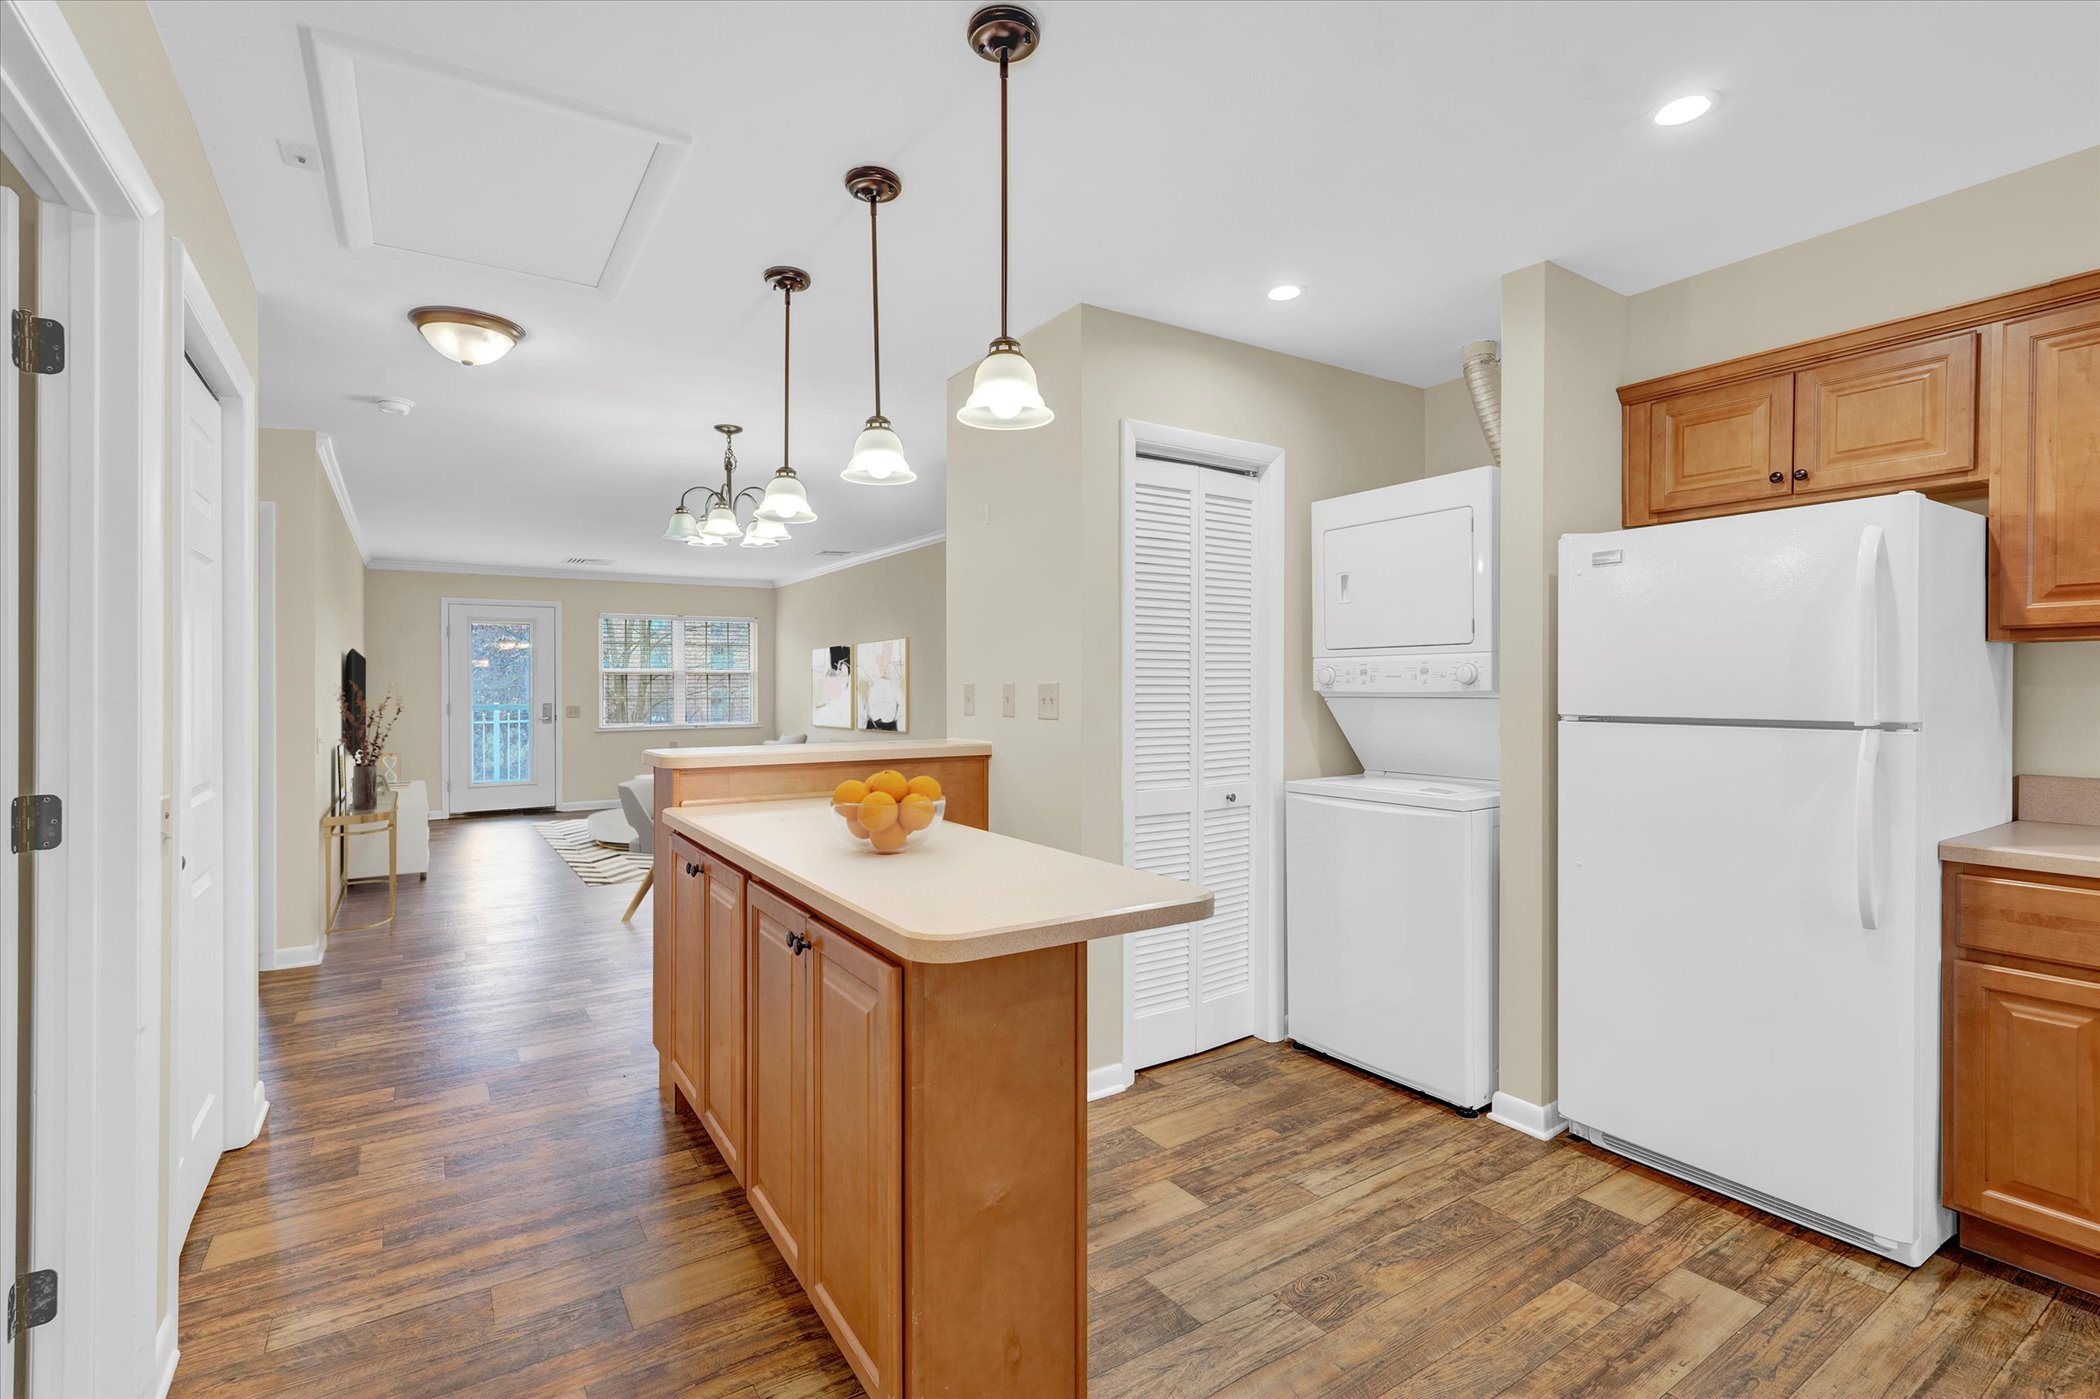 open floor plan kitchen with oak eat-in island and pendant lighting looking into living room with hardwood floors